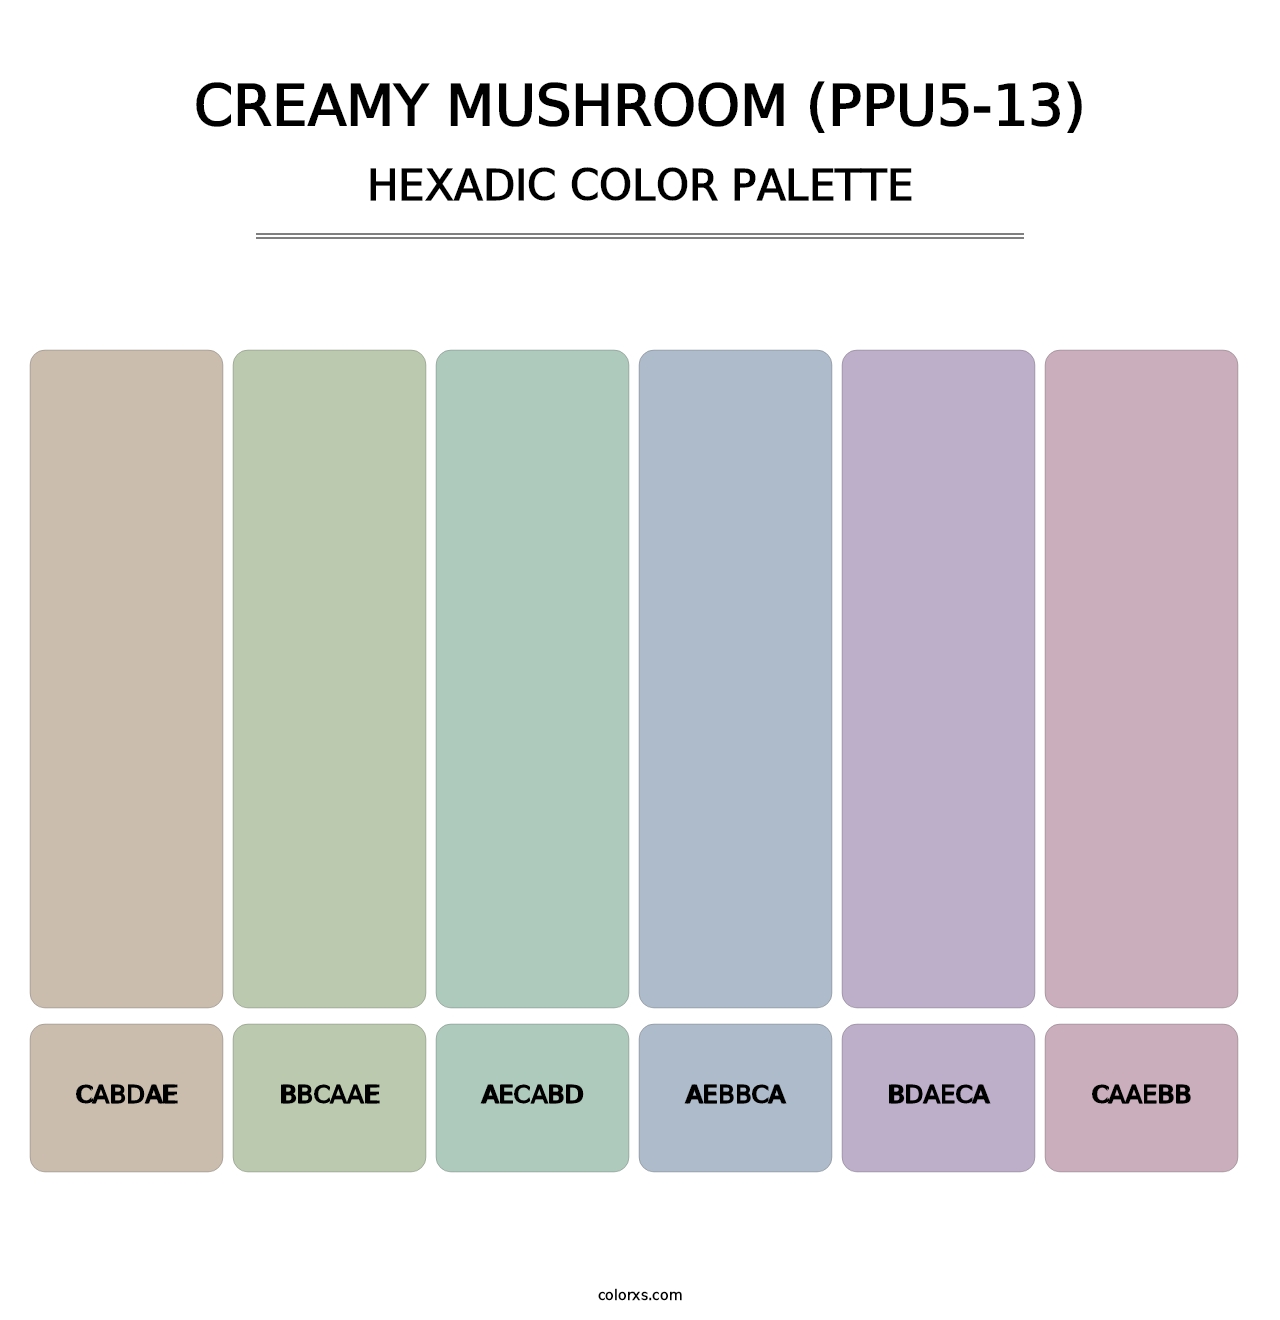 Creamy Mushroom (PPU5-13) - Hexadic Color Palette